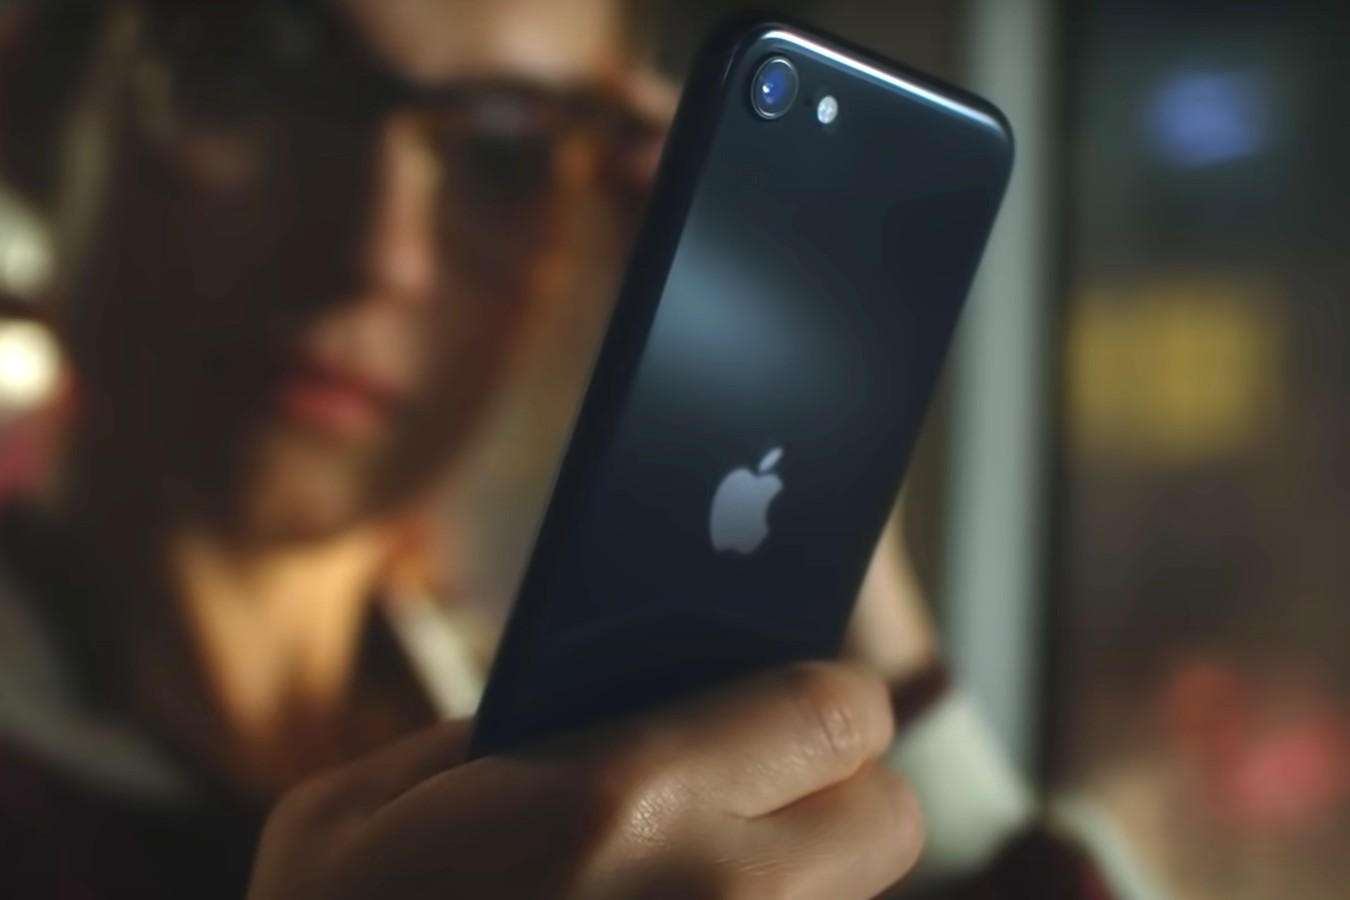 Apple iPhone SE 2020: Price, specs and best deals